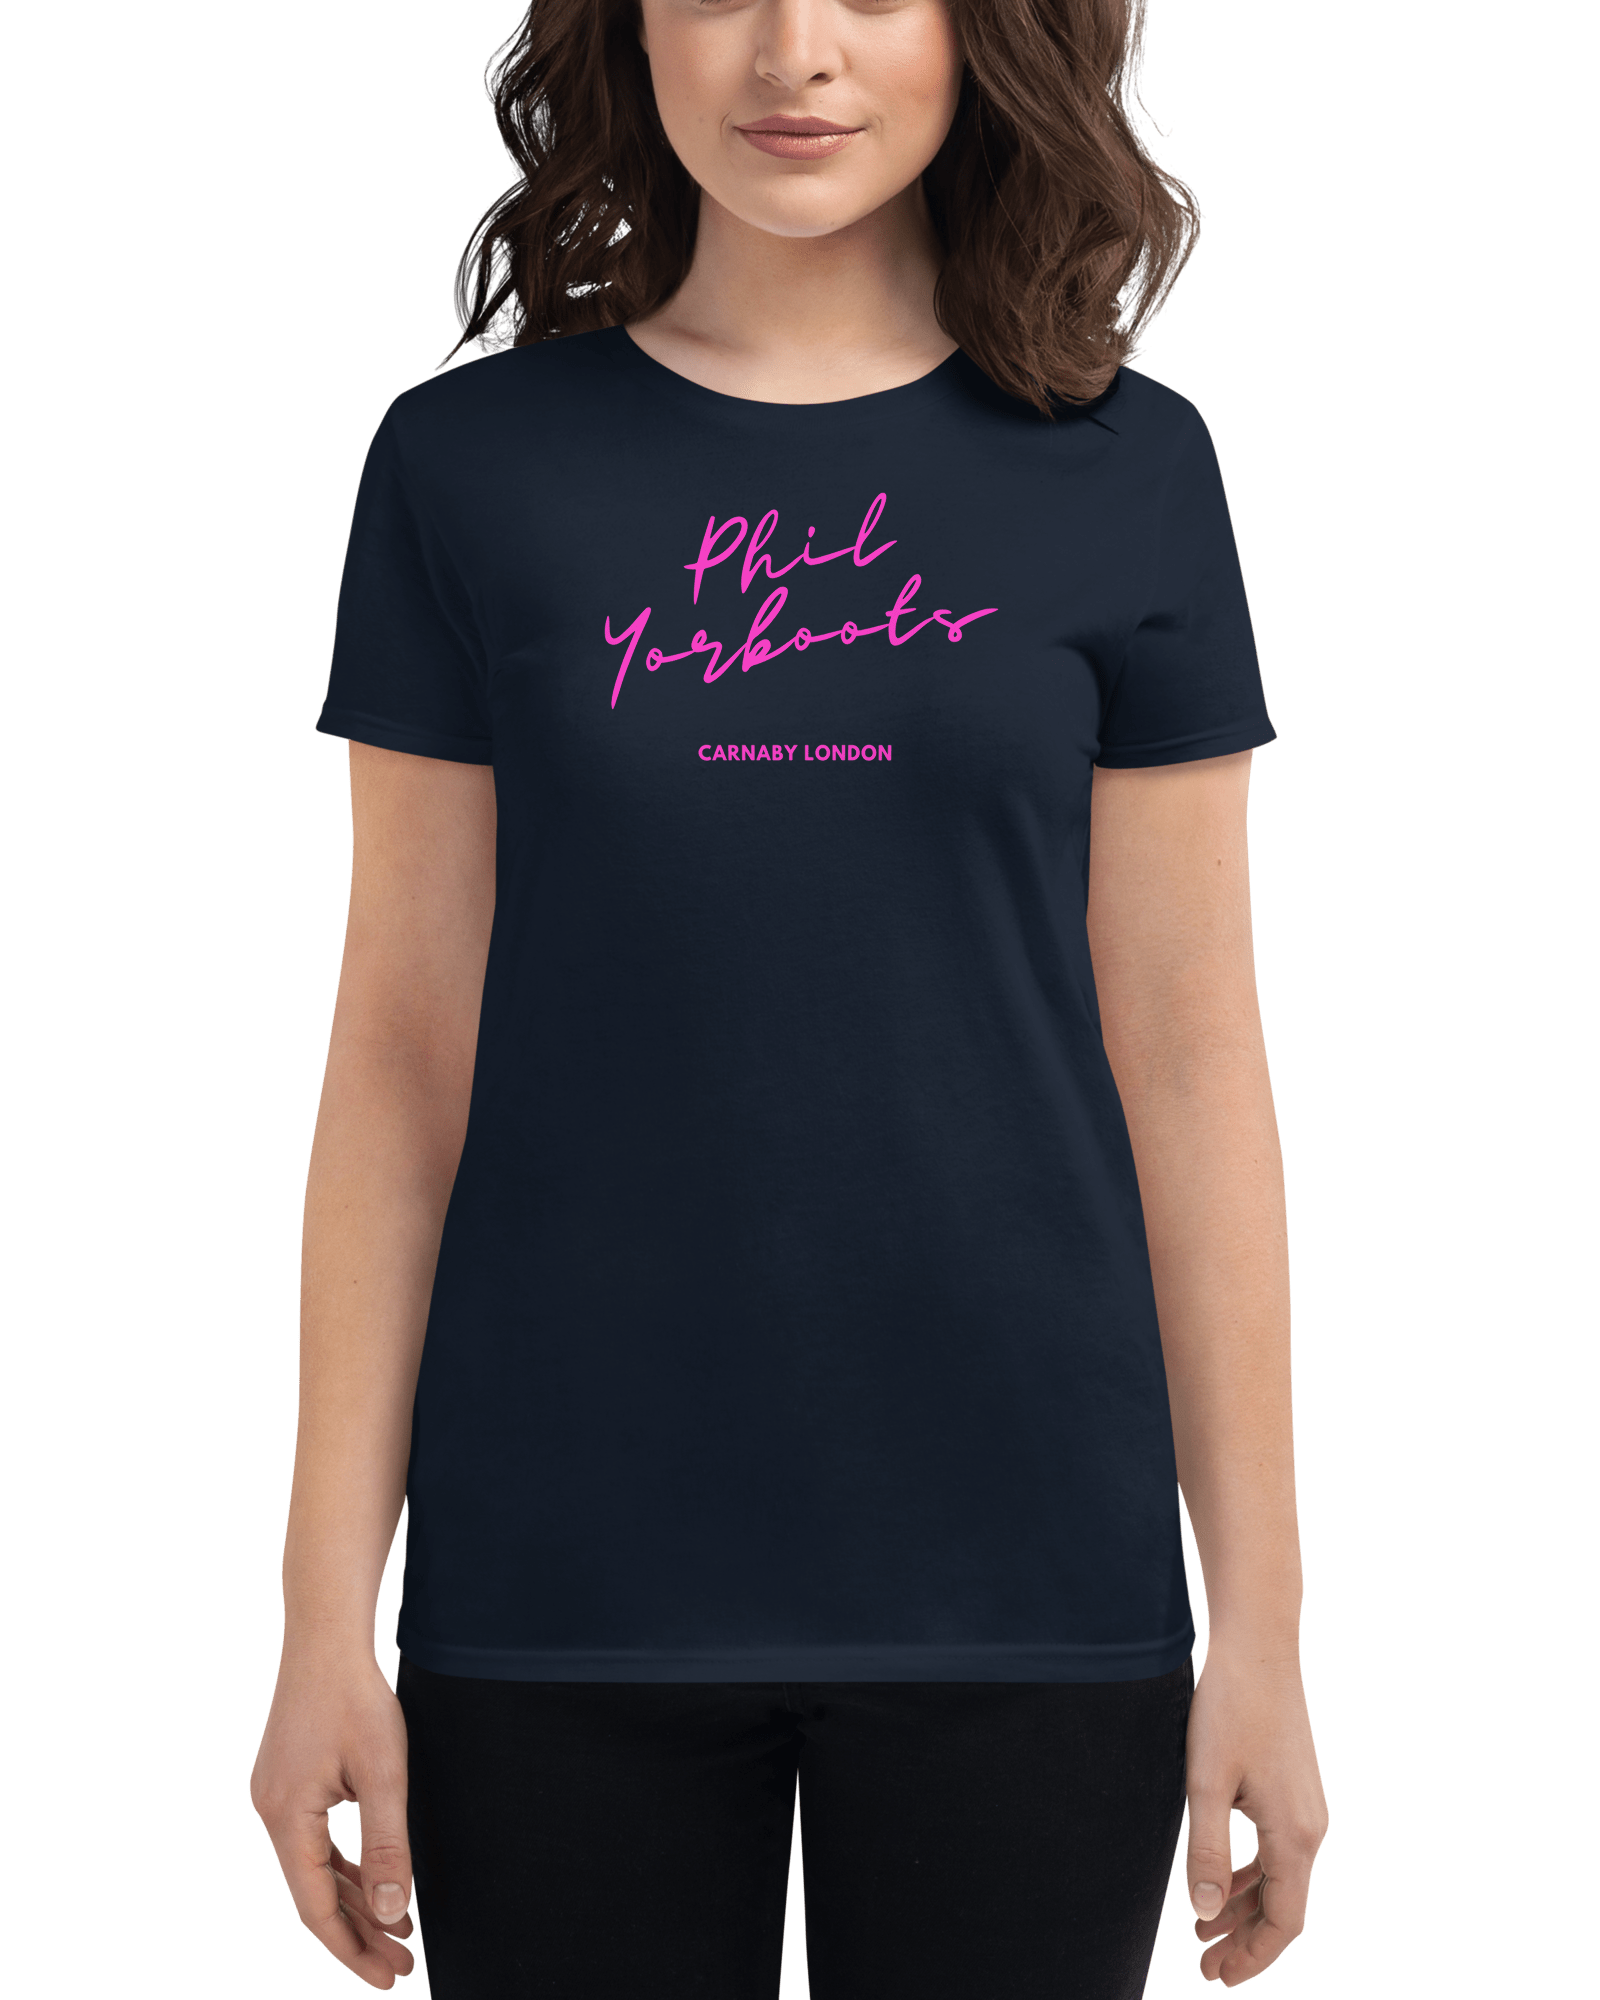 Phil Yorboots Women's T-shirt Navy / S Jolly & Goode